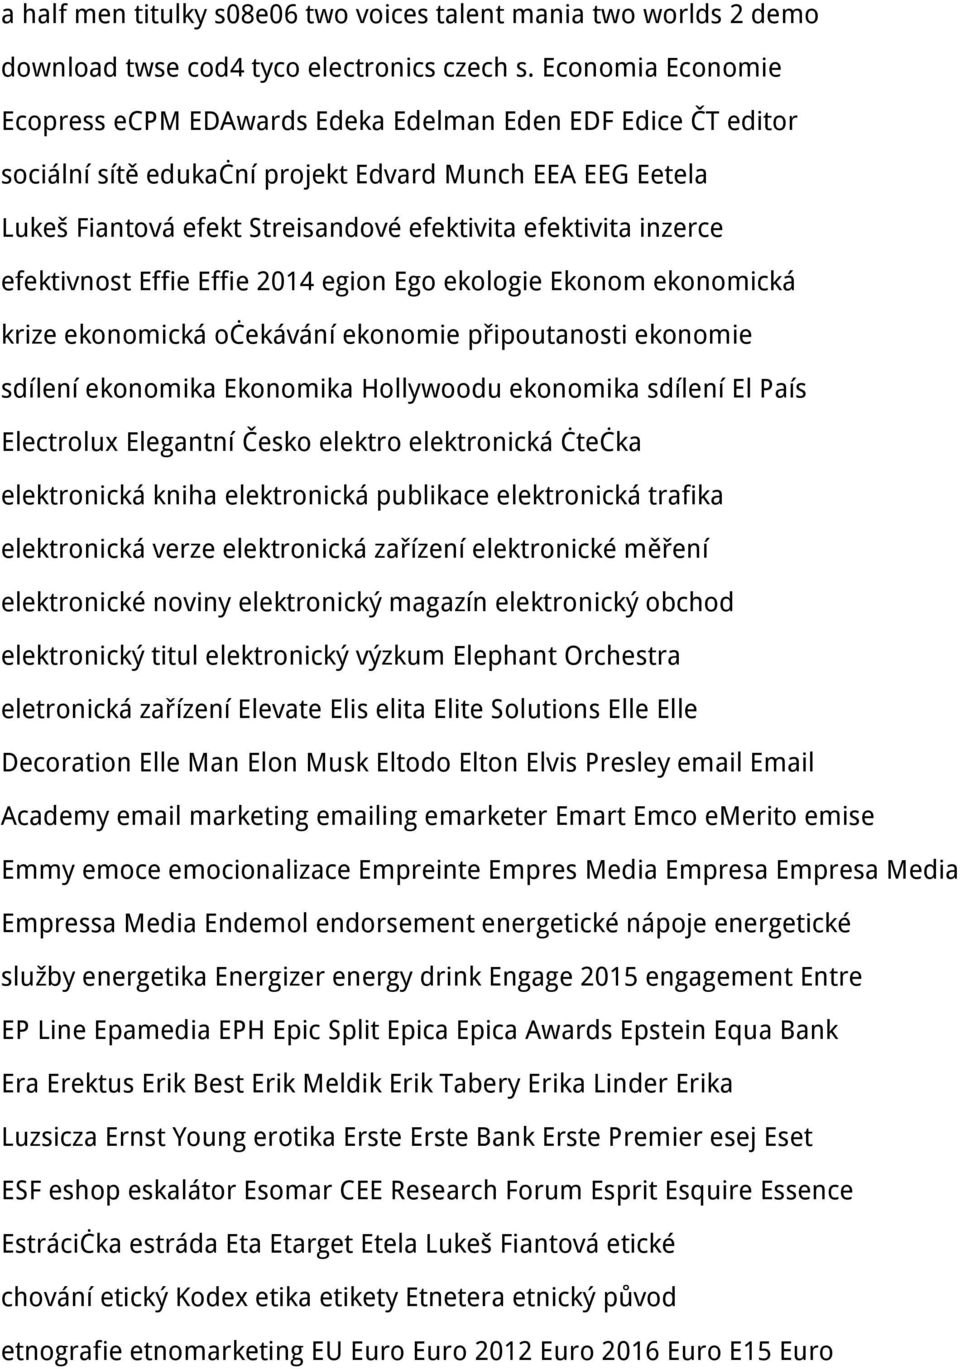 inzerce efektivnost Effie Effie 2014 egion Ego ekologie Ekonom ekonomická krize ekonomická očekávání ekonomie připoutanosti ekonomie sdílení ekonomika Ekonomika Hollywoodu ekonomika sdílení El País